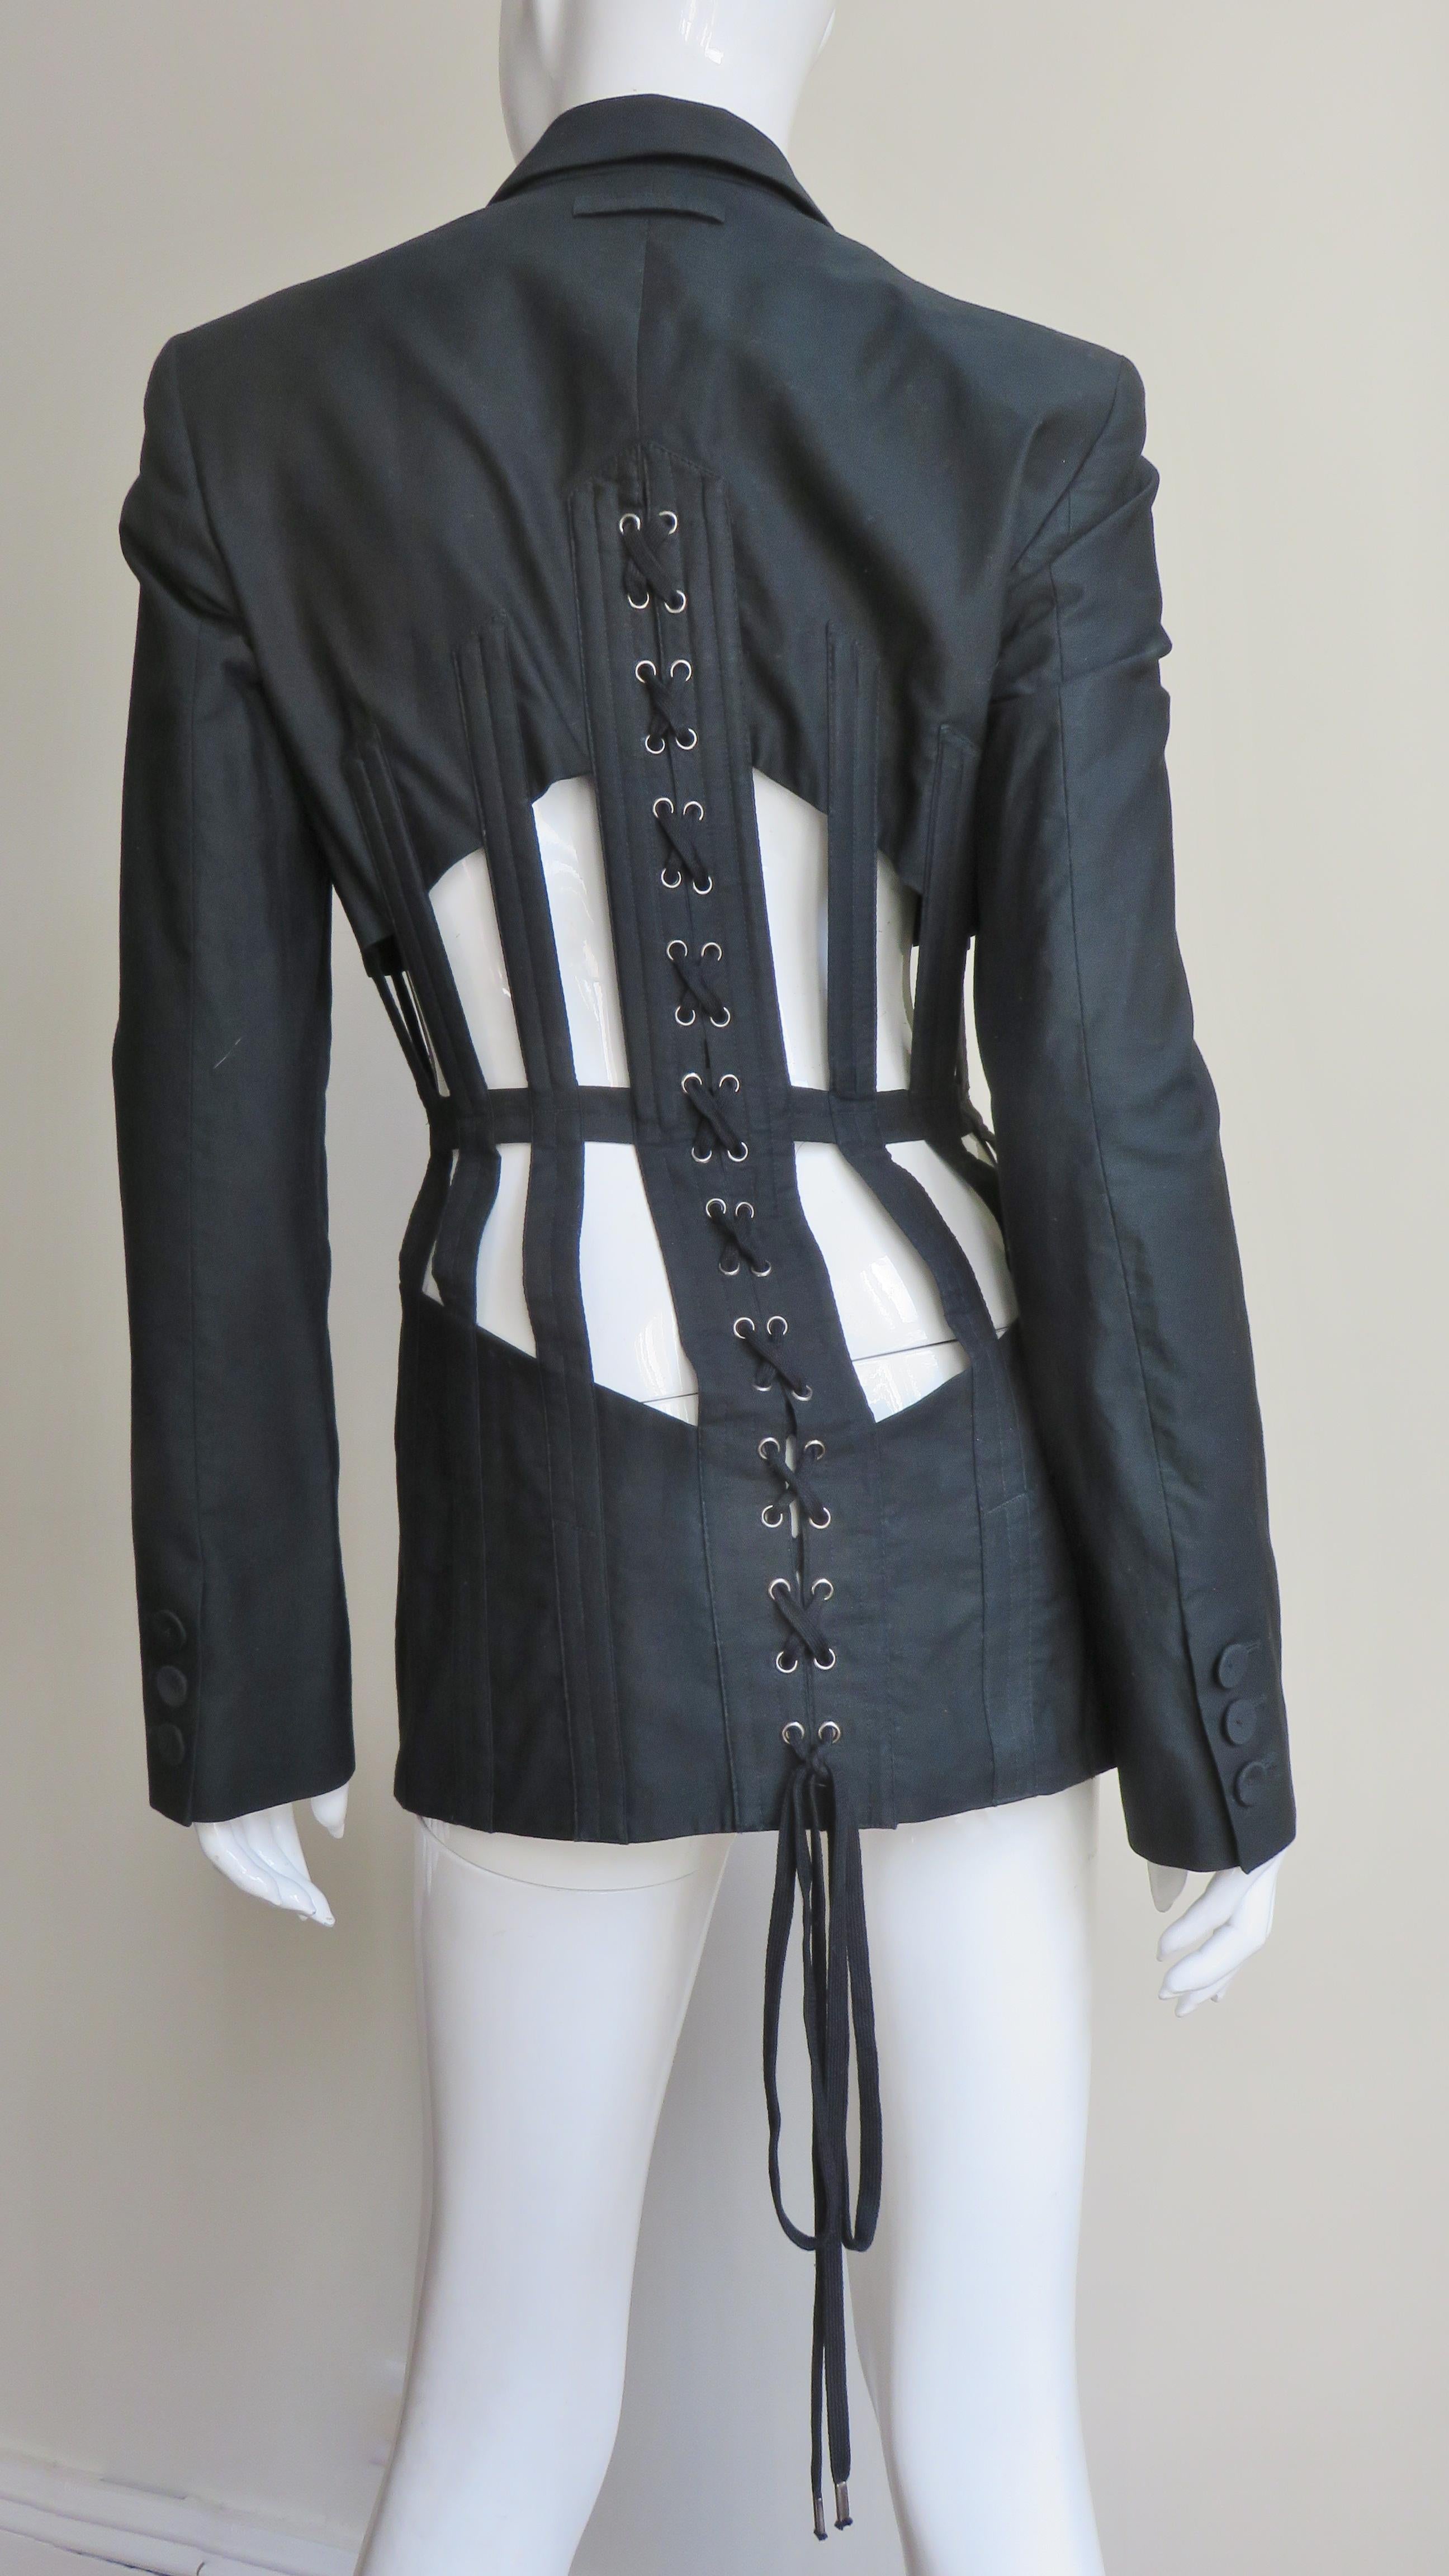 Jean Paul Gaultier Iconic Cage Corset lace up Jacket Pant Suit S/S 1989 For Sale 9